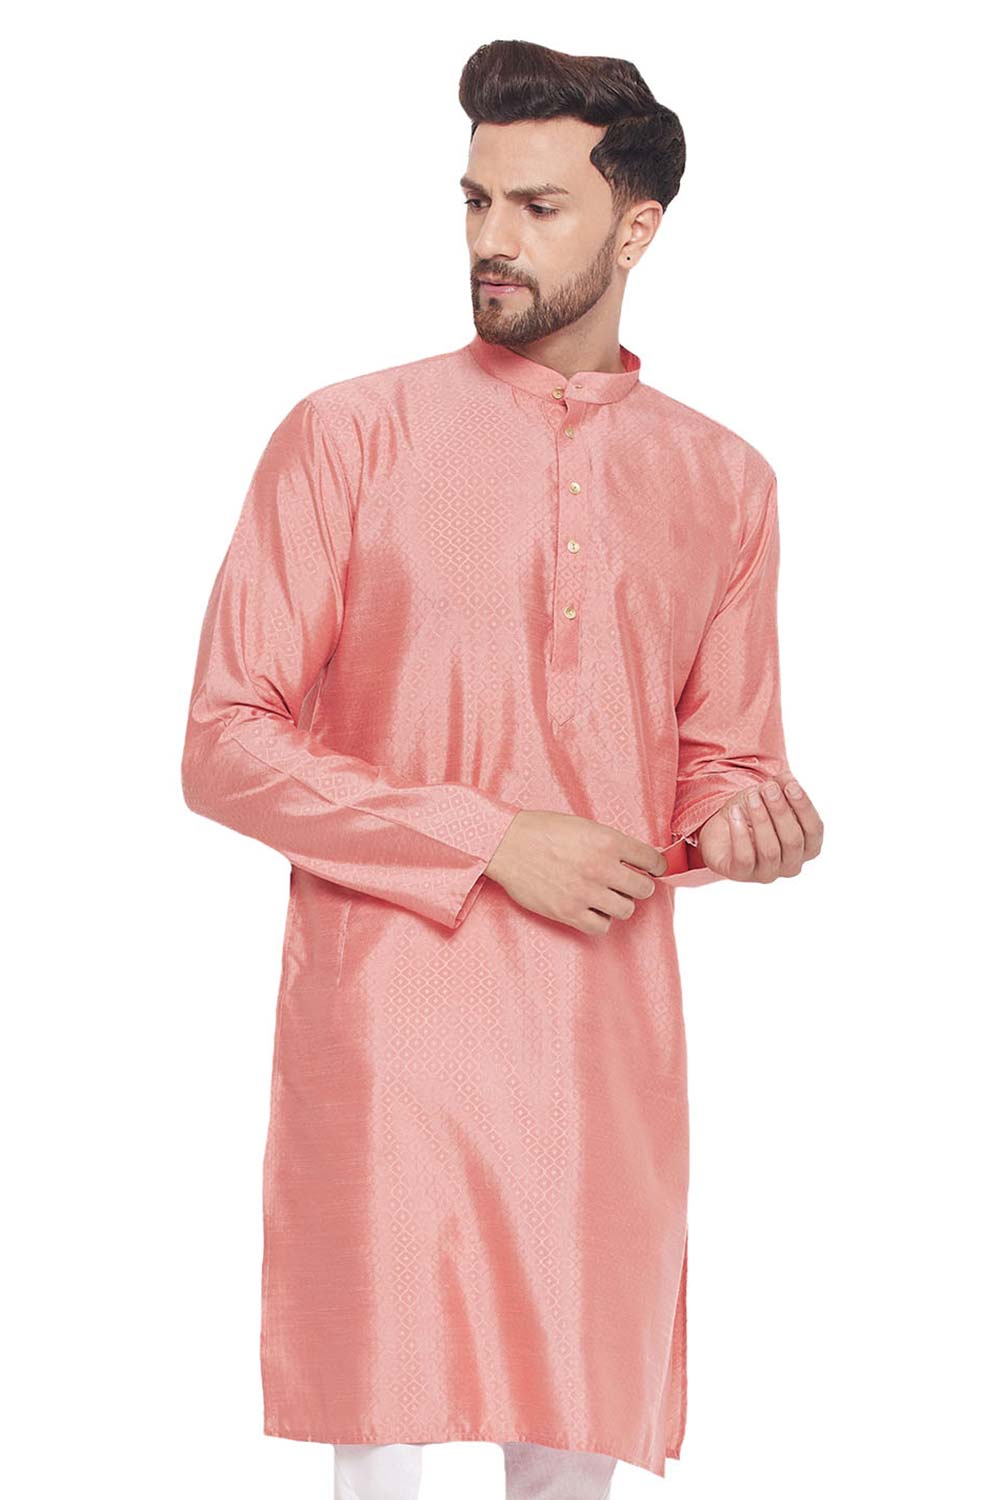 Buy Men's Pink Silk Blend Ethnic Motif Woven Design Short Kurta Online - Zoom Out